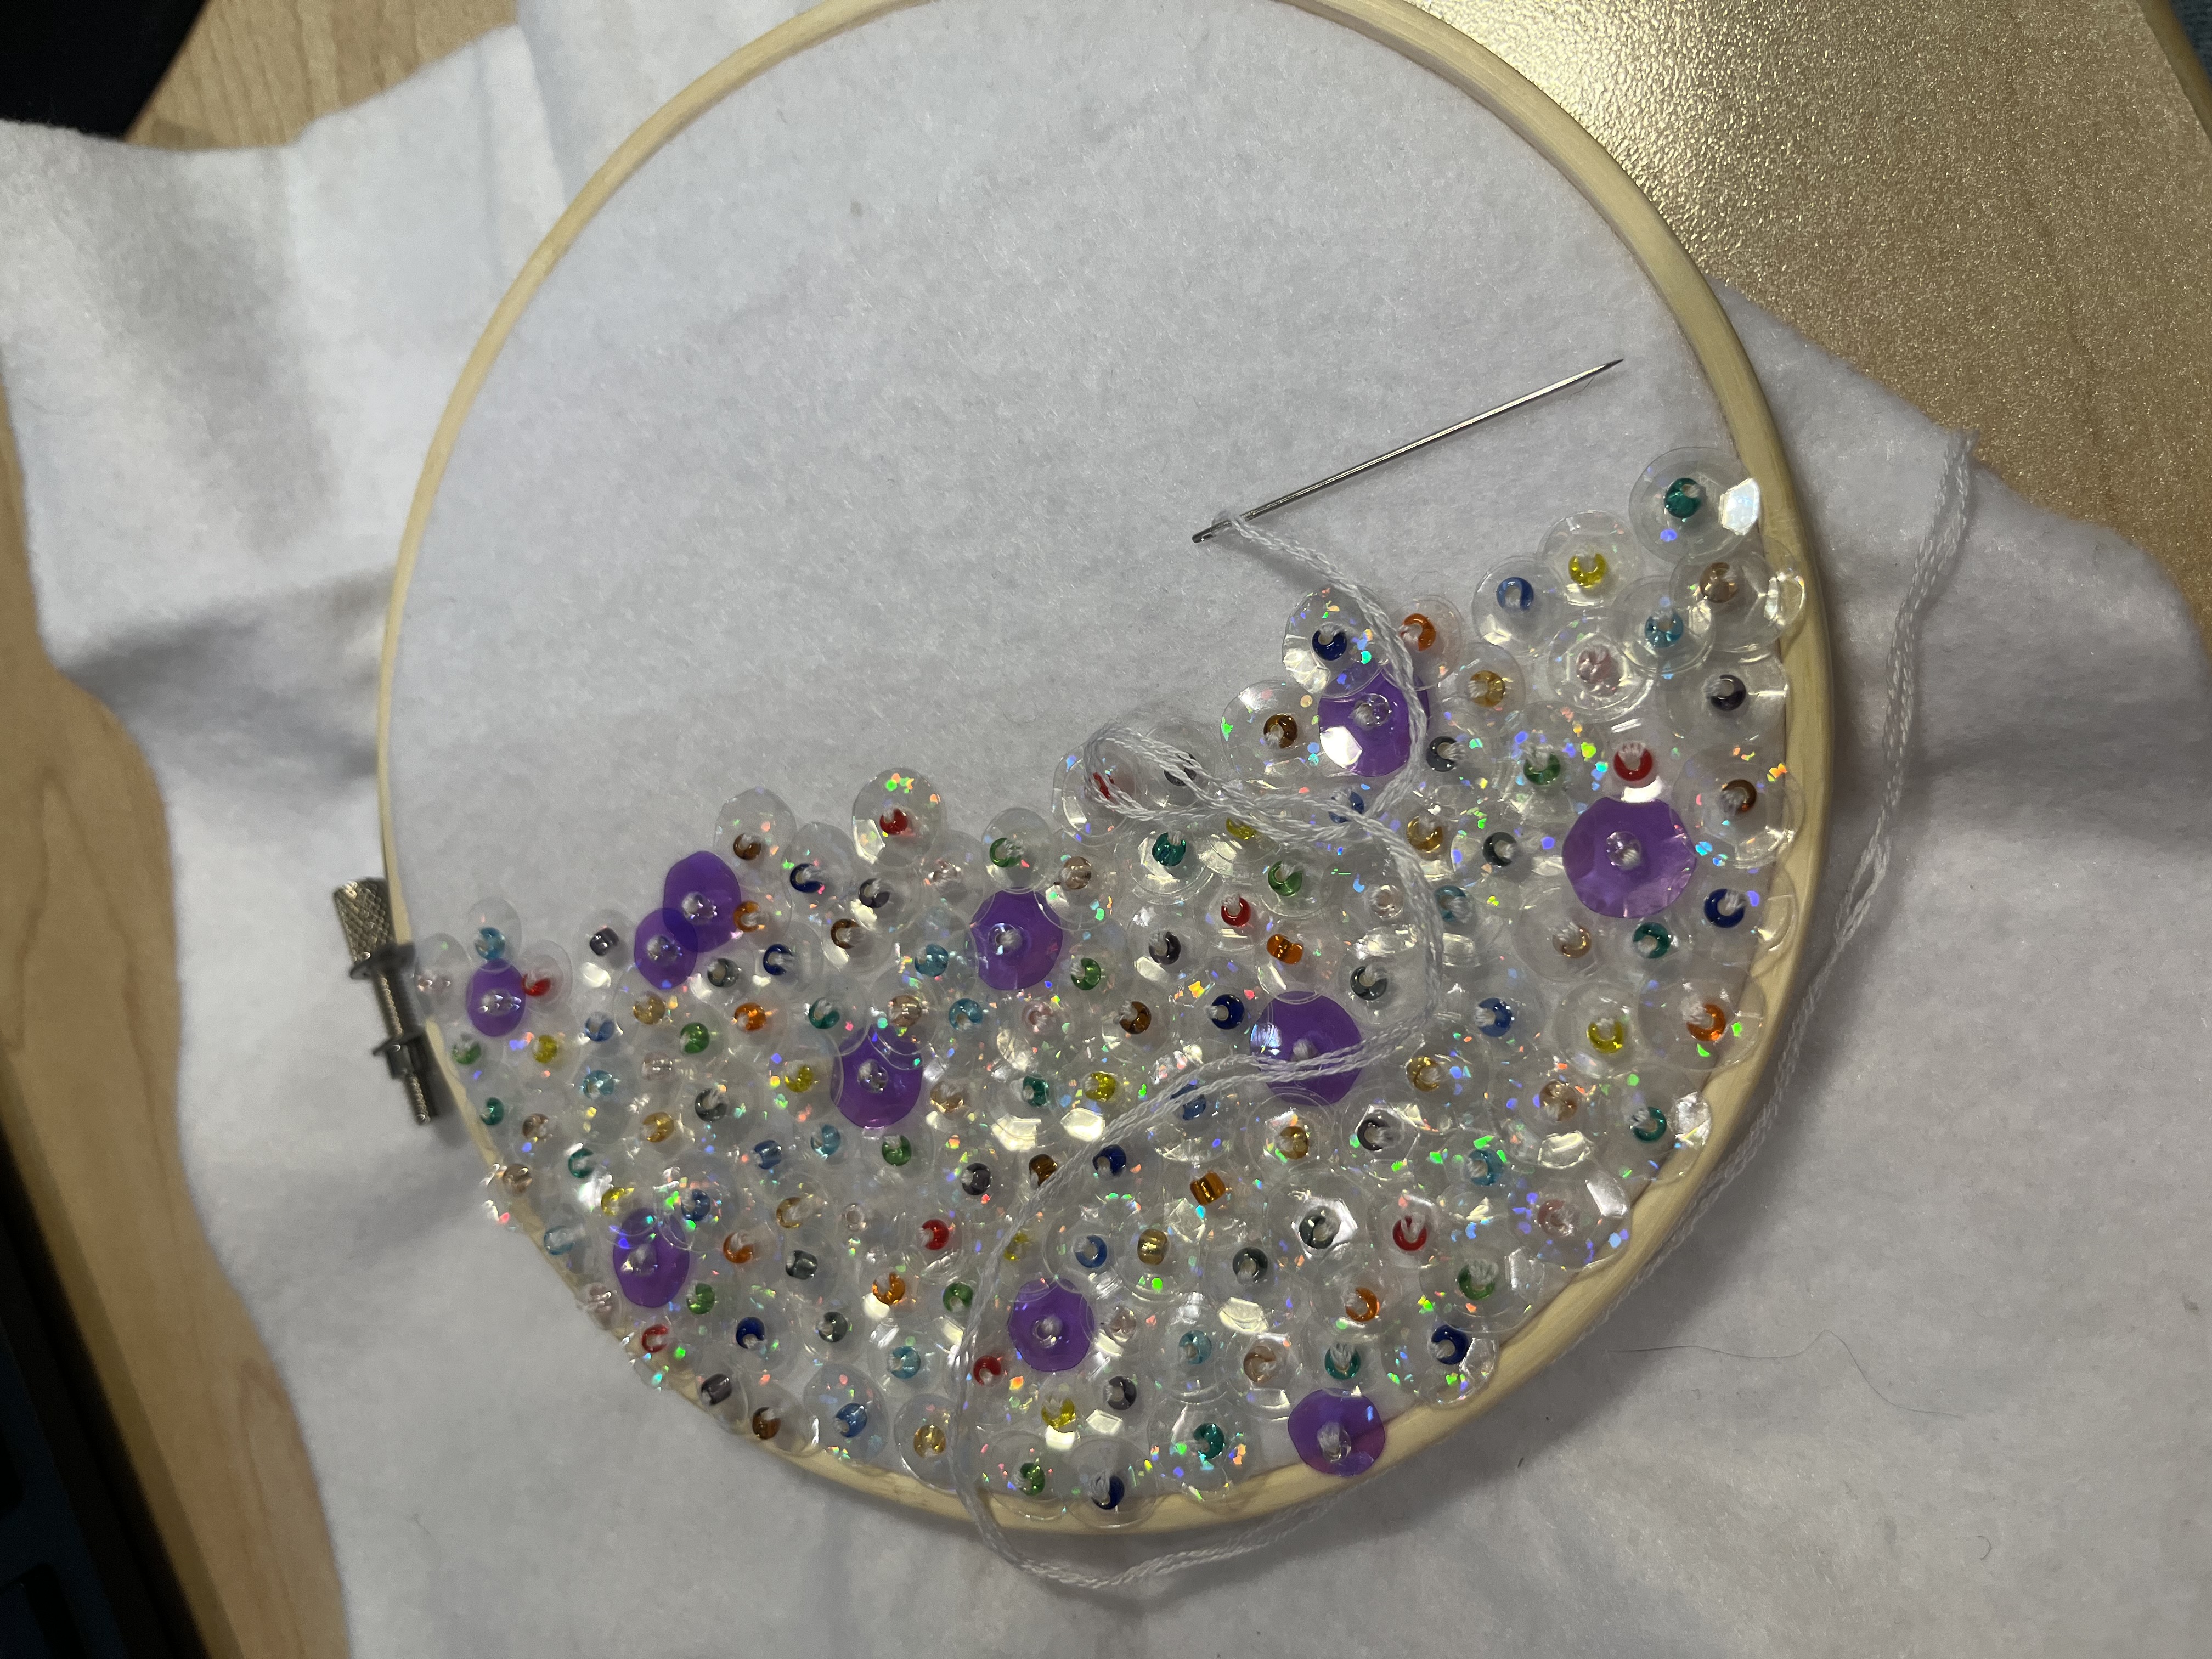 Sequin embroidery art progress photo. 